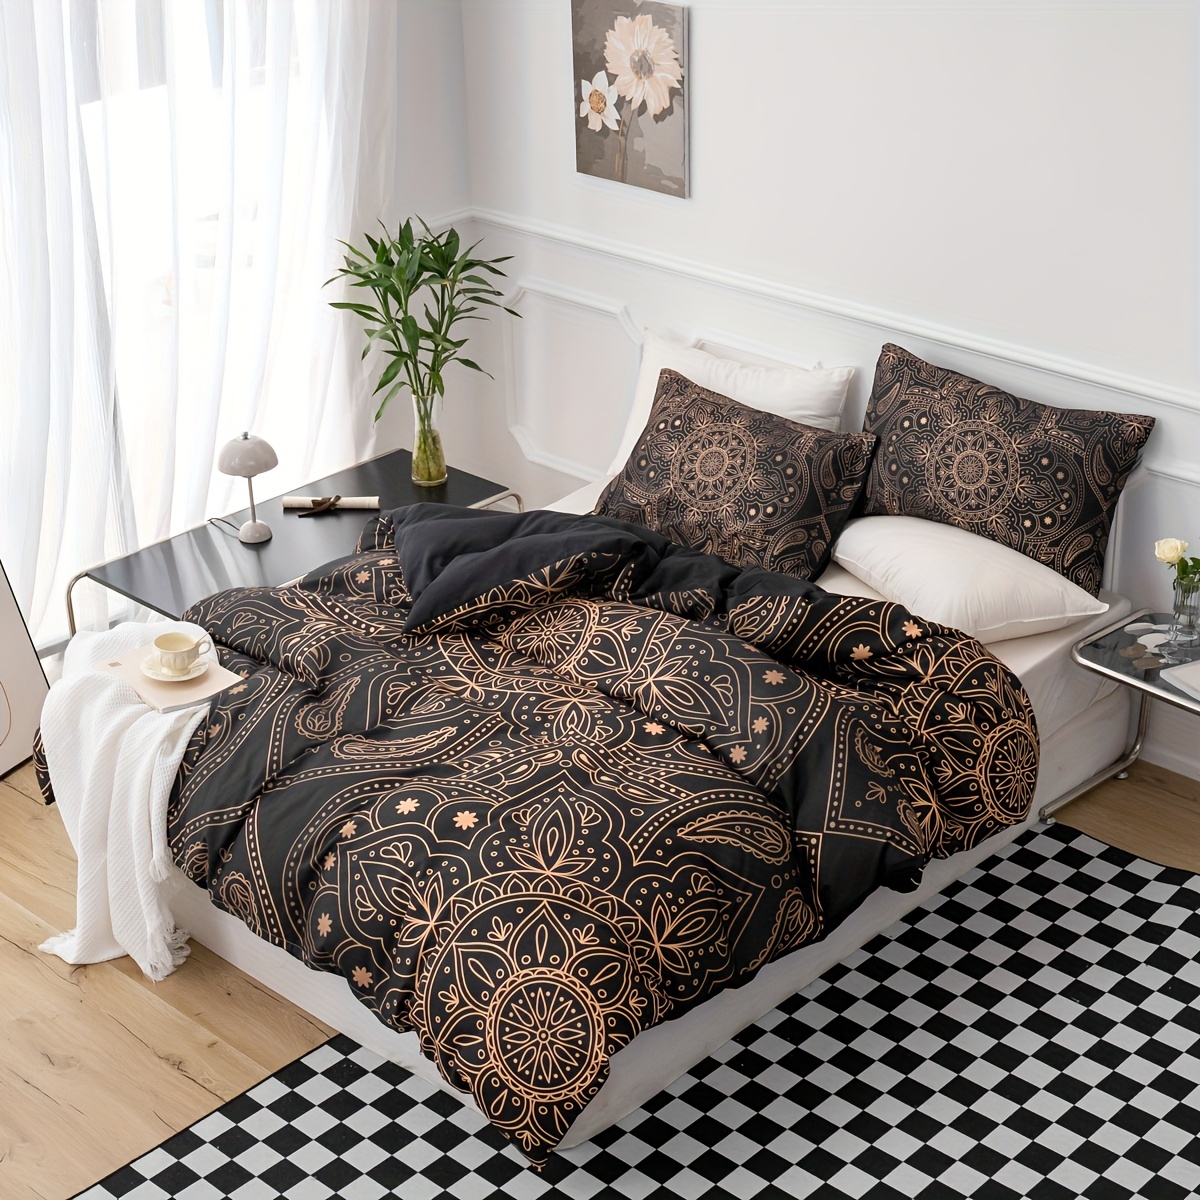 

3pcs Duvet Cover Set, Bohemian Print Bedding Set, Soft Comfortable Duvet Cover, For Bedroom, Guest Room (1*duvet Cover + 2*pillowcase, Without Core)